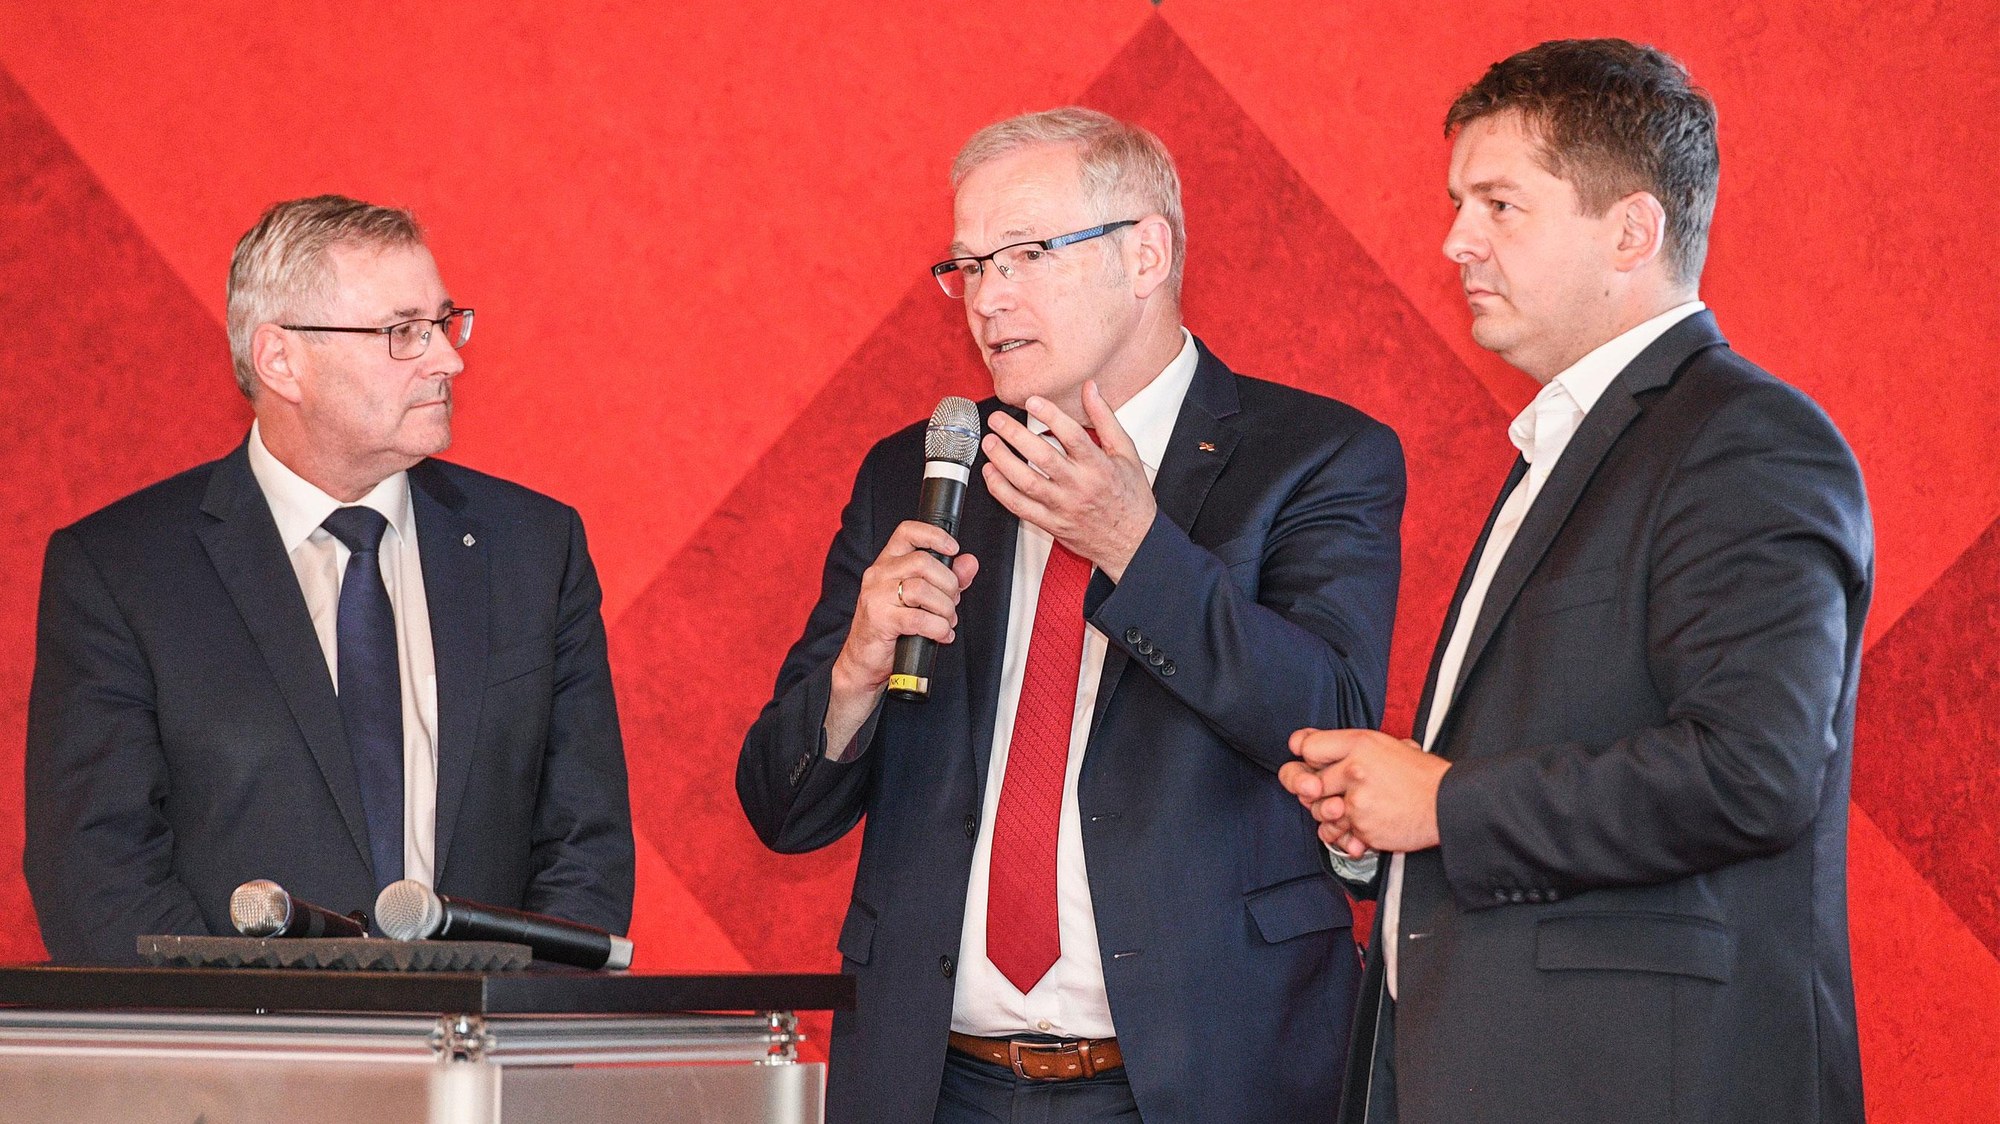 From left to right: Jürgen Ude, Rolf Henke and Sven Schulze